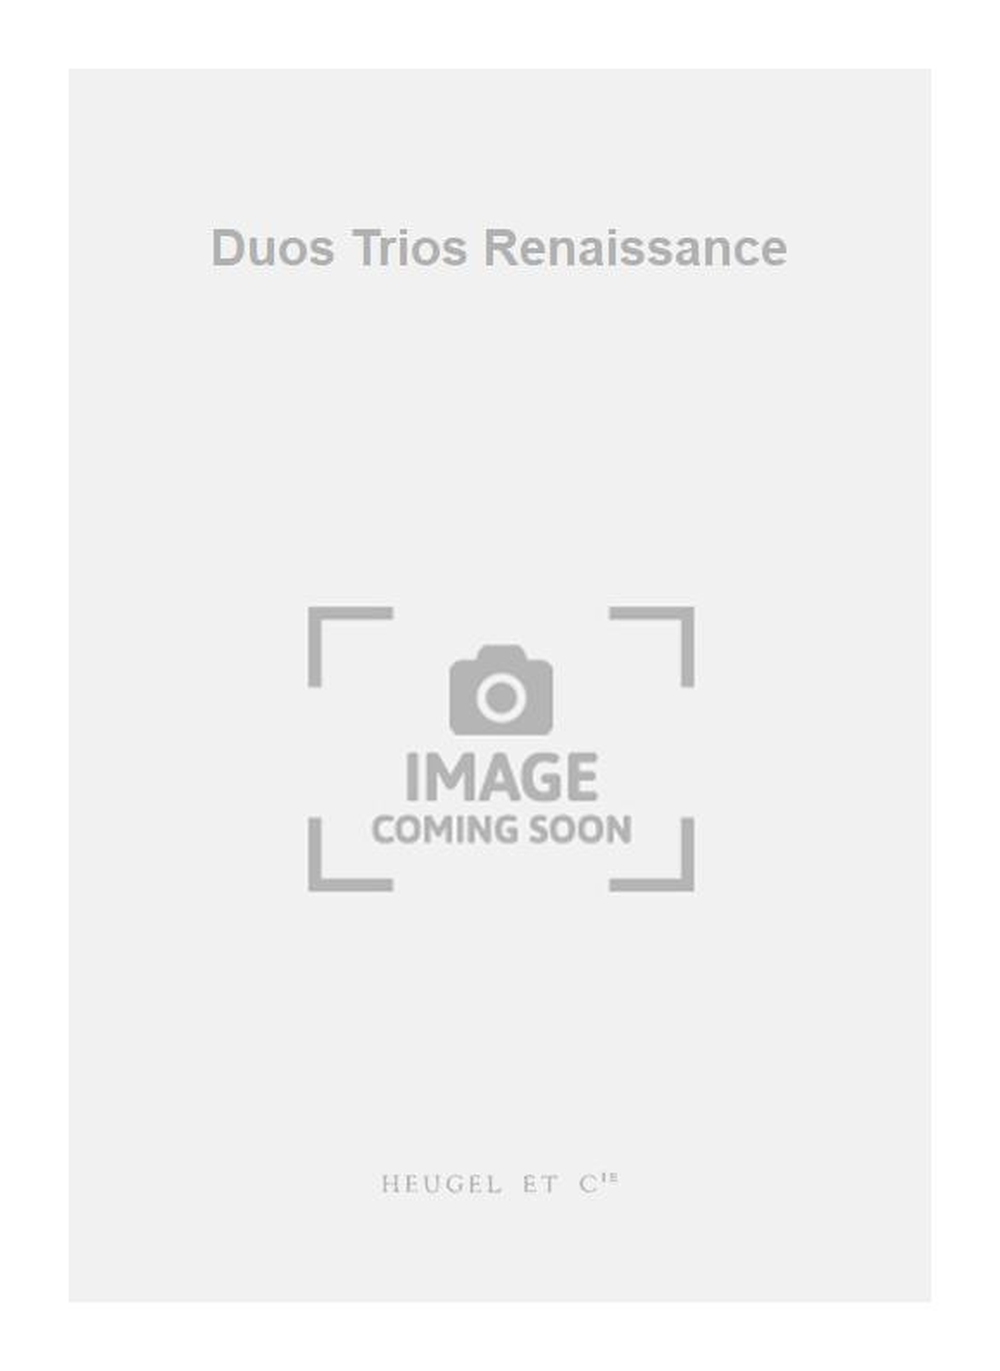 Duos Trios Renaissance